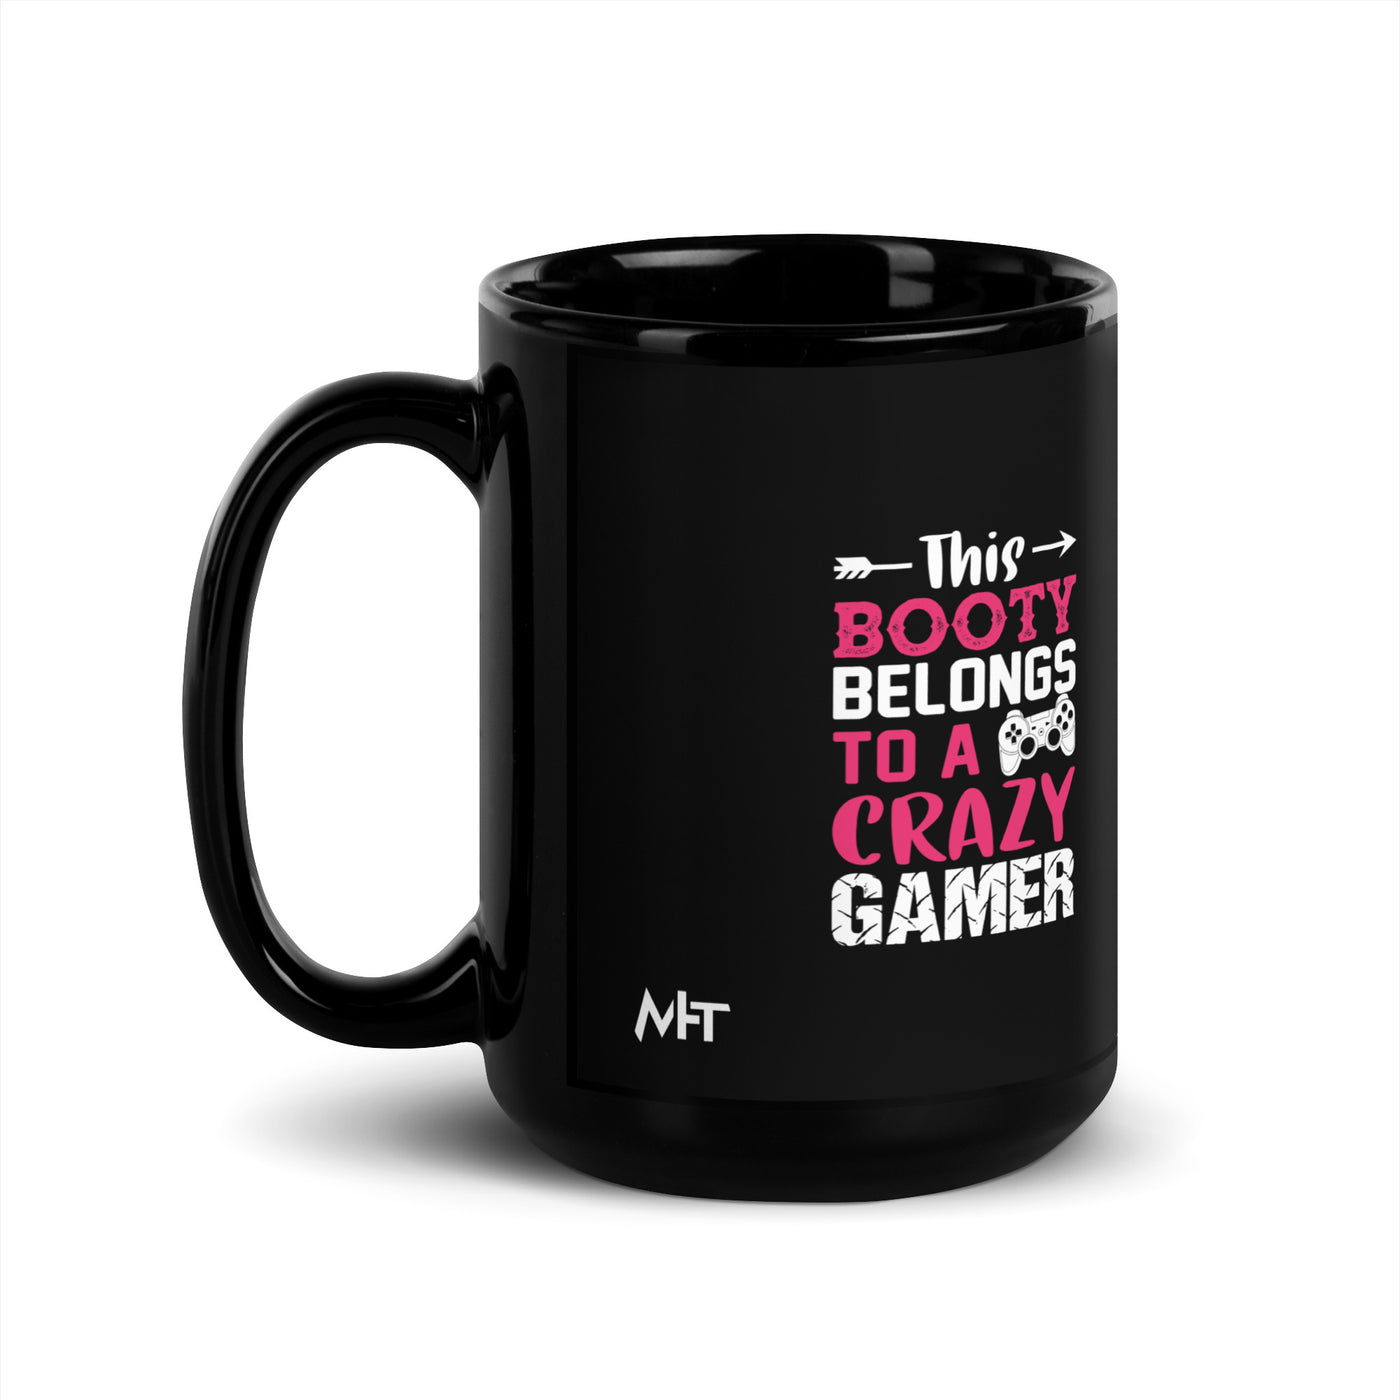 This Booty belongs to a Crazy Gamer - Black Glossy Mug